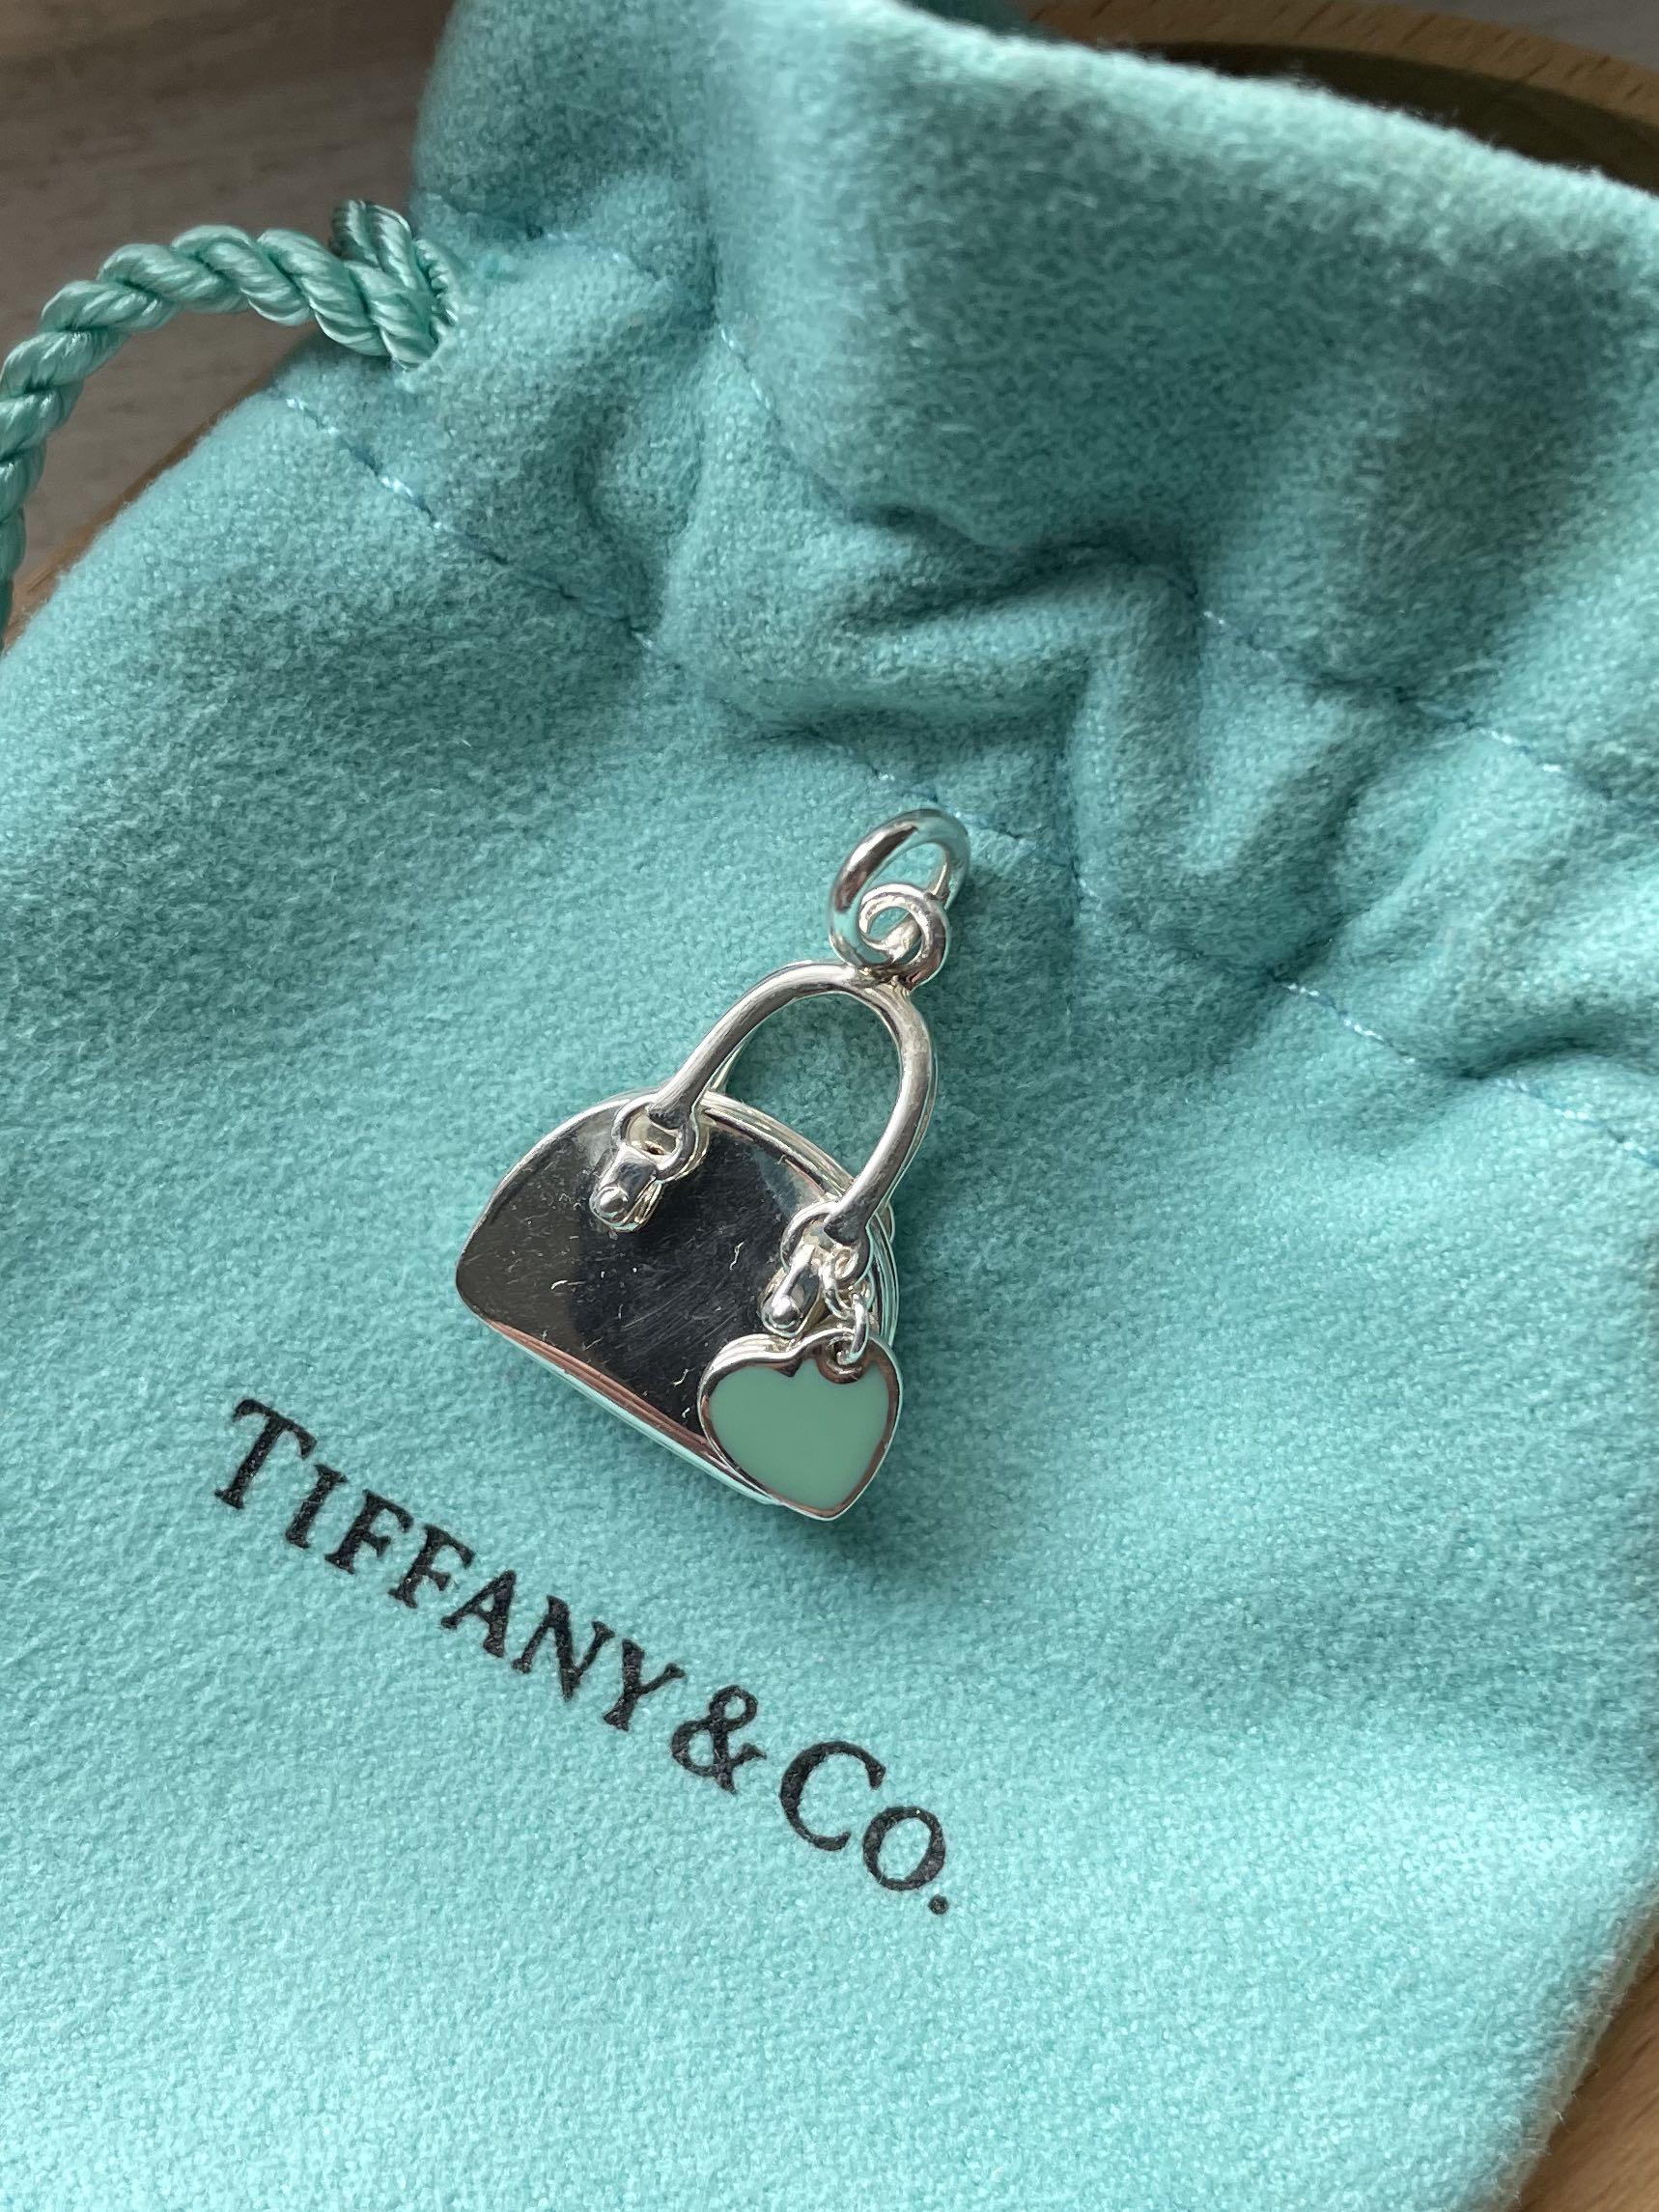 Handbag charm in sterling silver with Tiffany Blue® enamel finish.